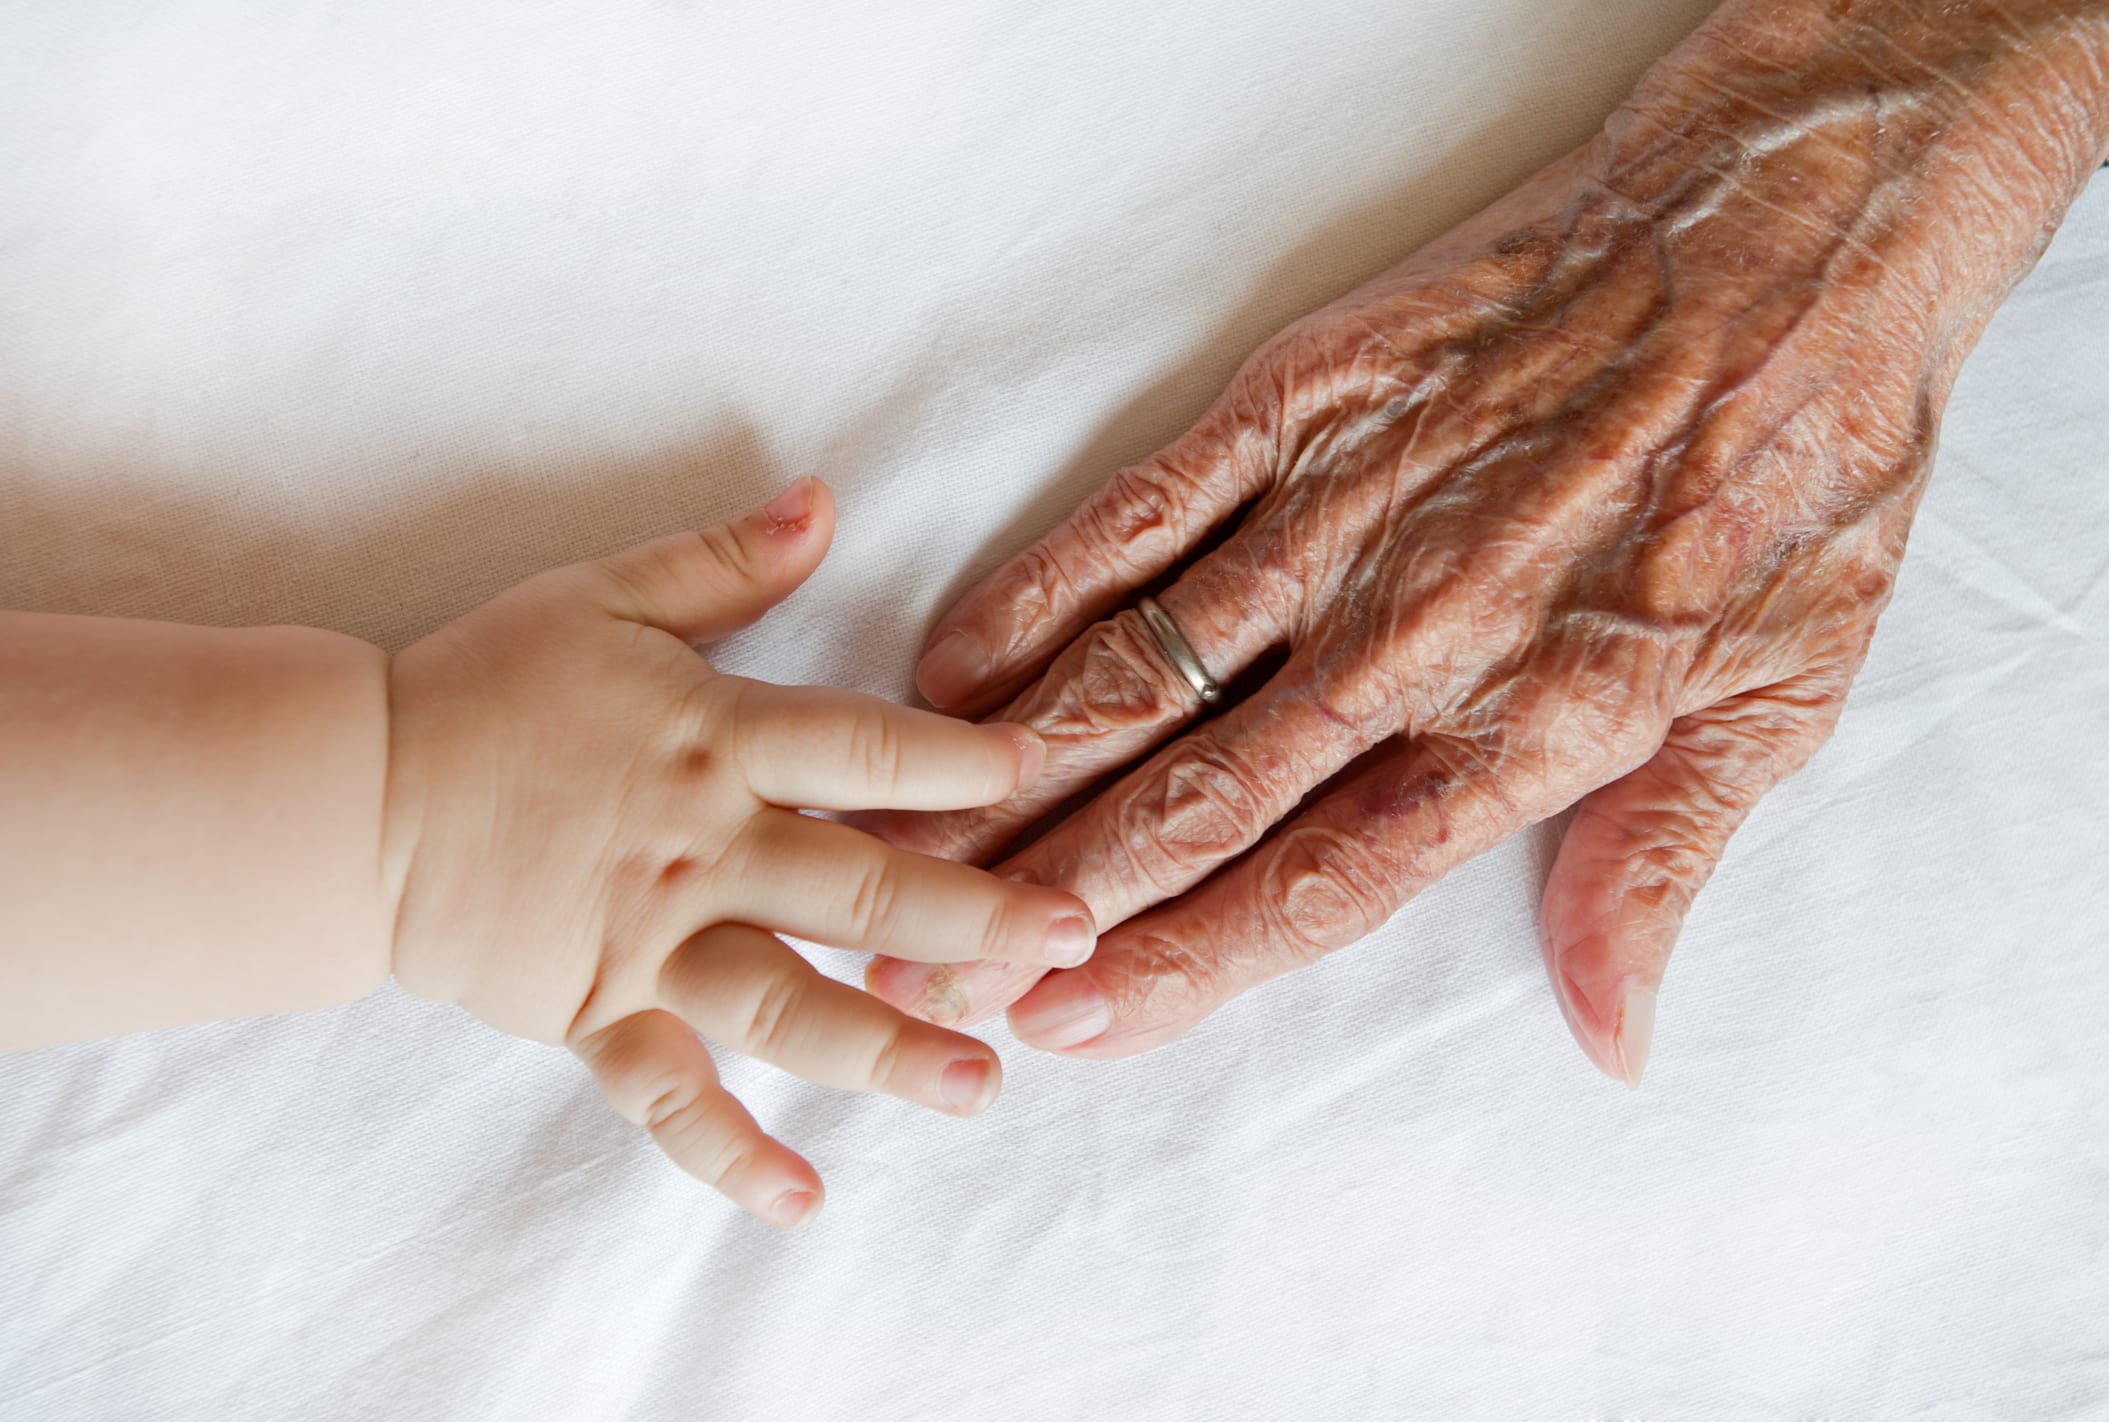 grandparent and grand child hands touching